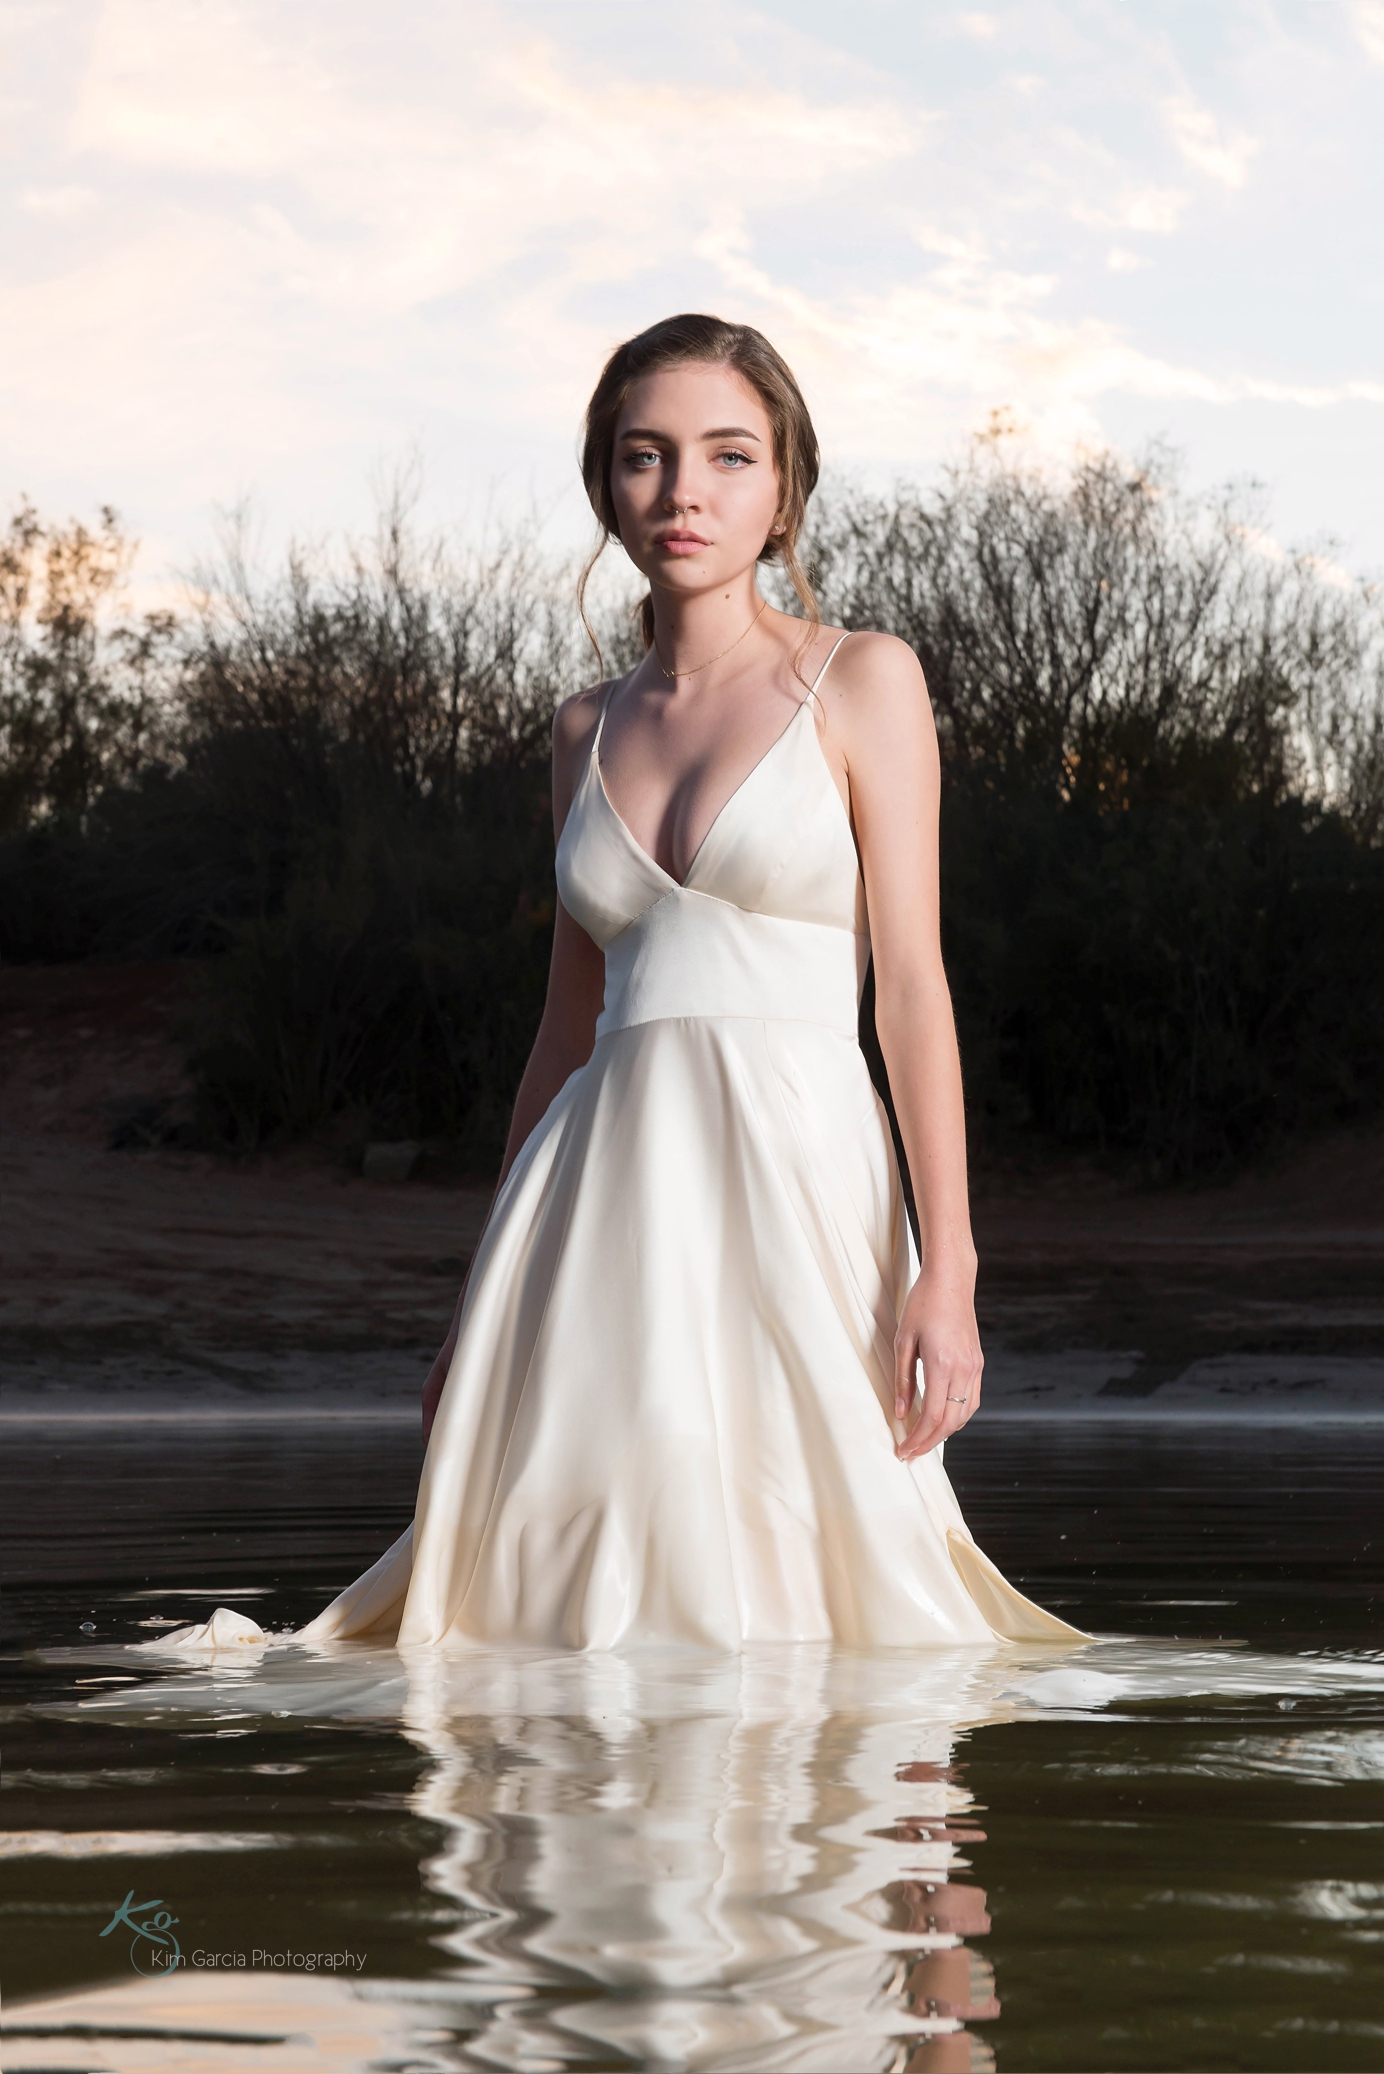 Yuma Arizona senior photo of girl in water in white dress senior portrait idea